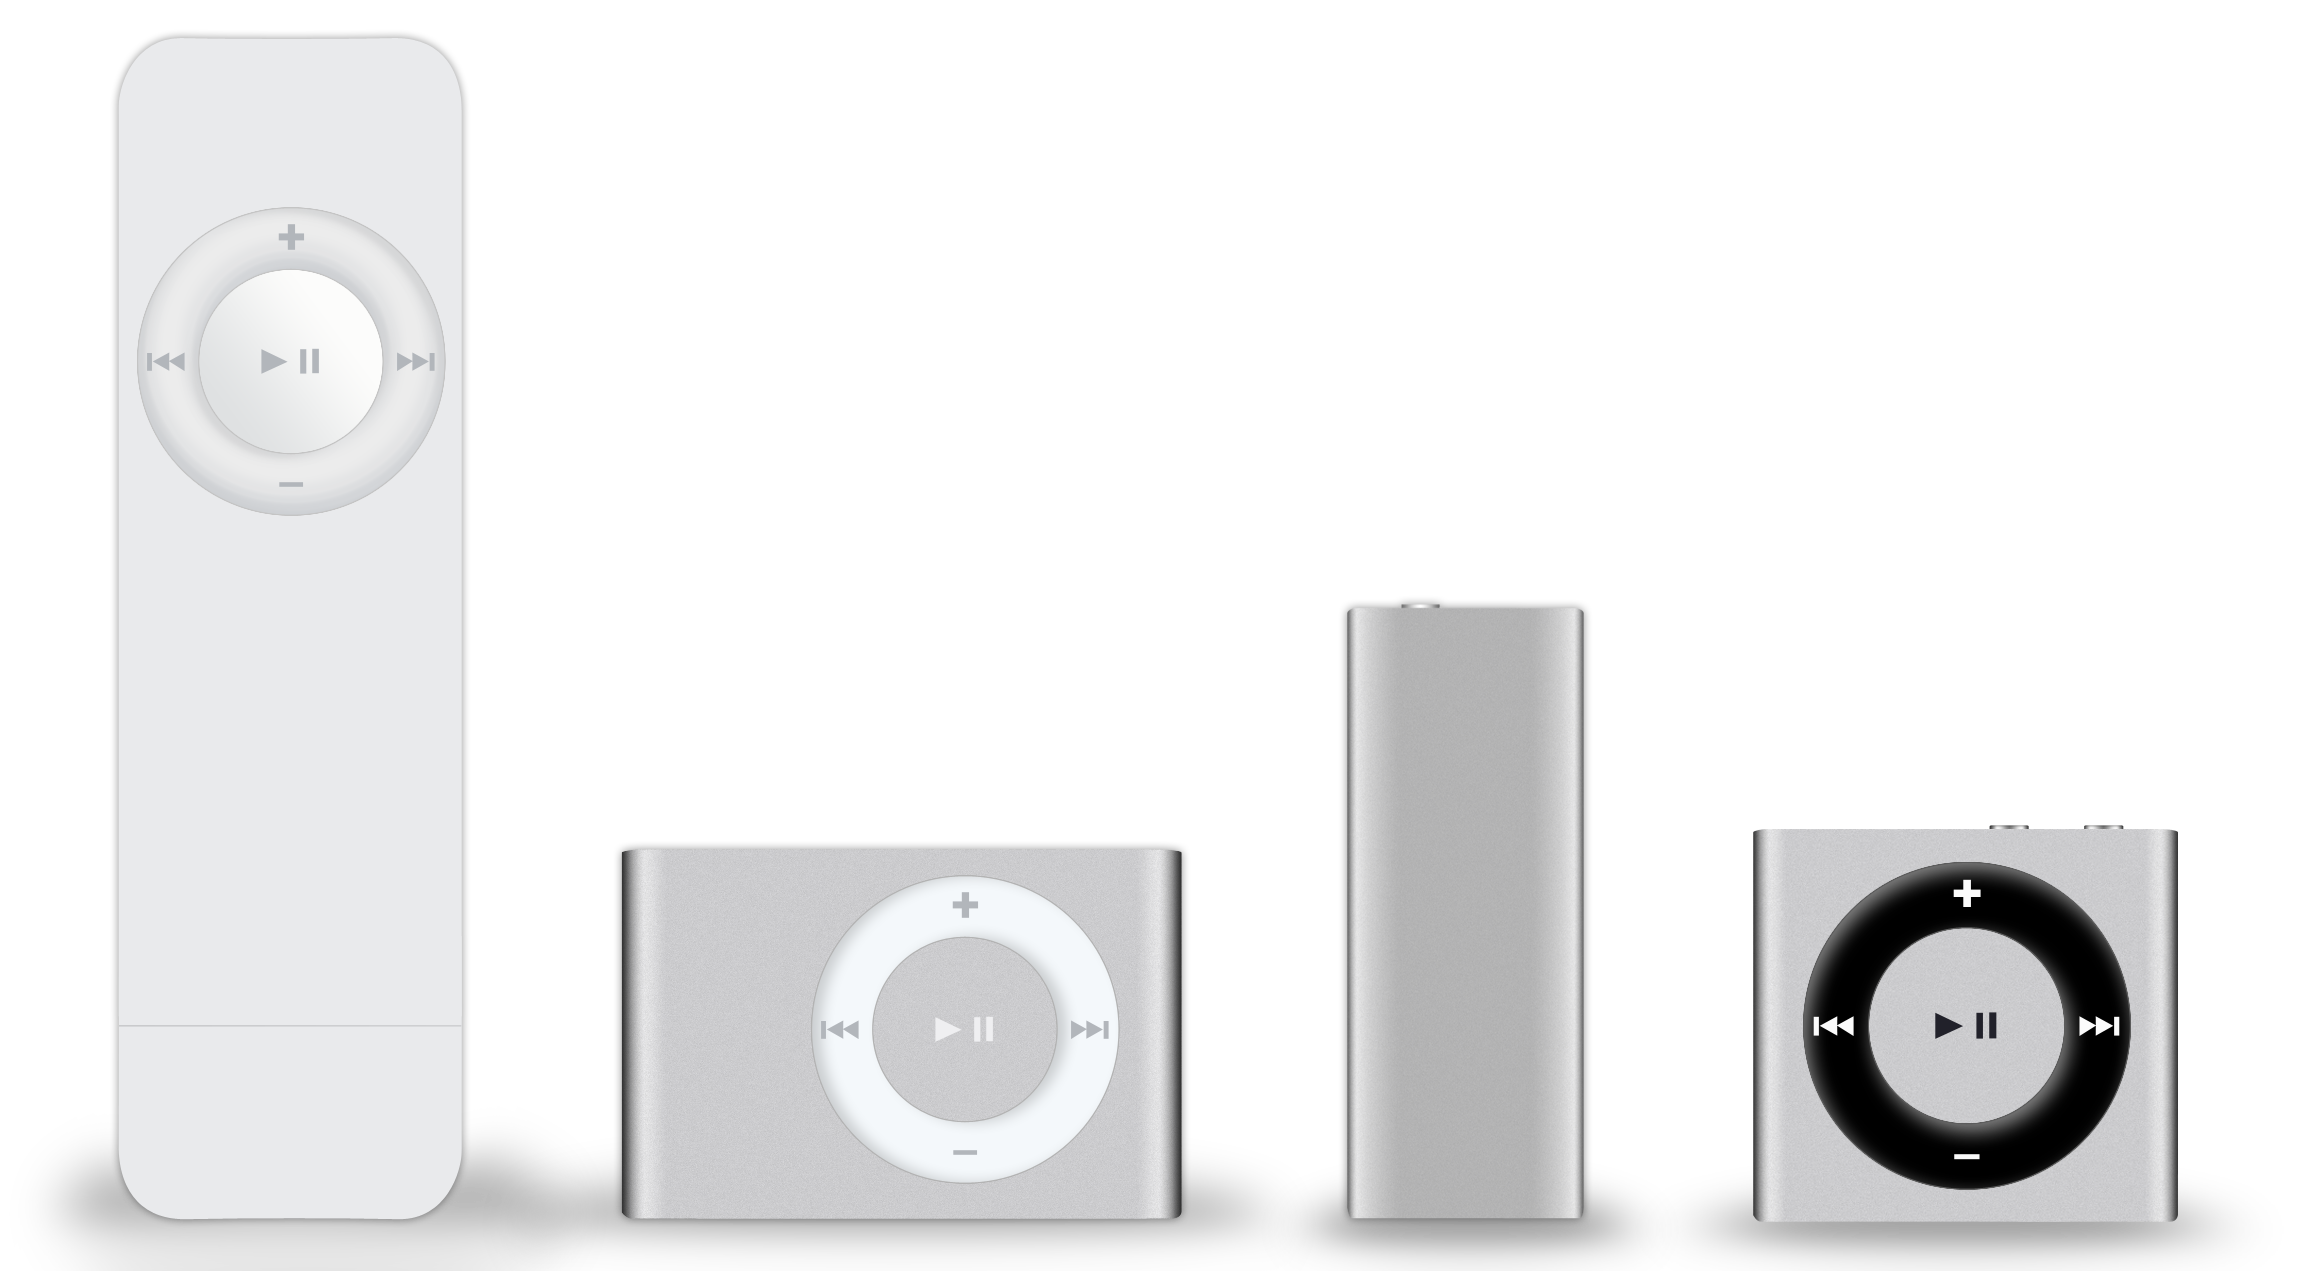 iPod Shuffle models. Image: Matthieu Riegler, Wikimedia Commons